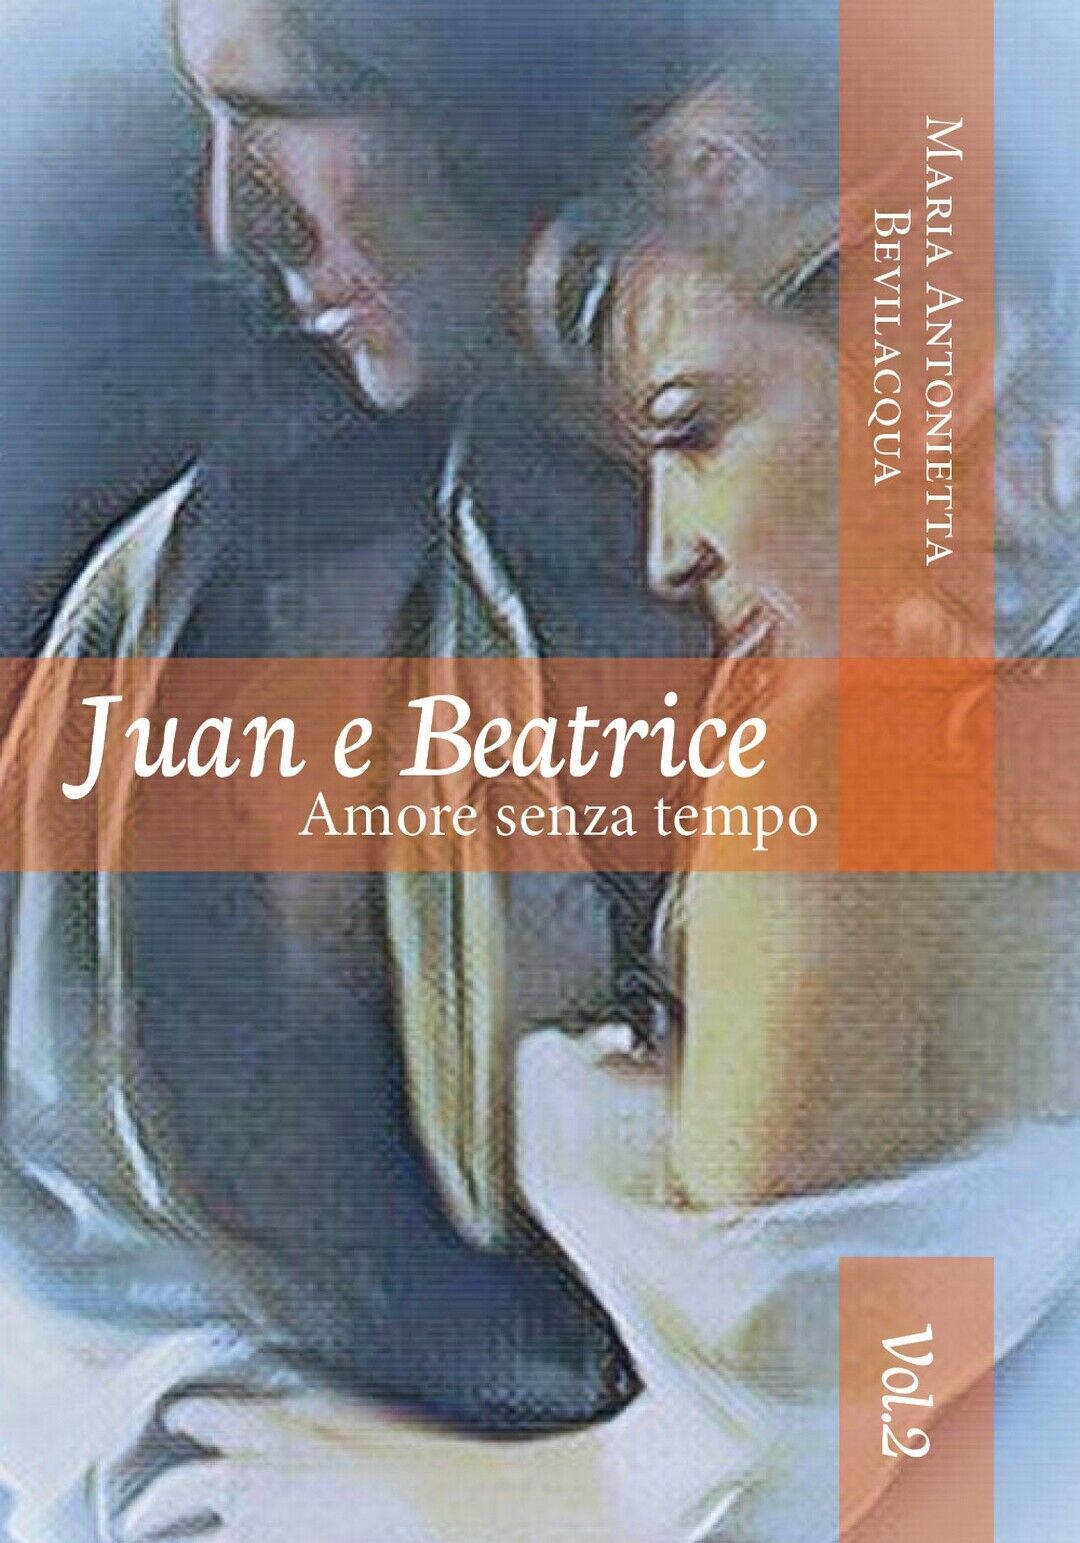 Juan e Beatrice Amore senza tempo saga. volume secondo  di Maria Antonietta Bev.